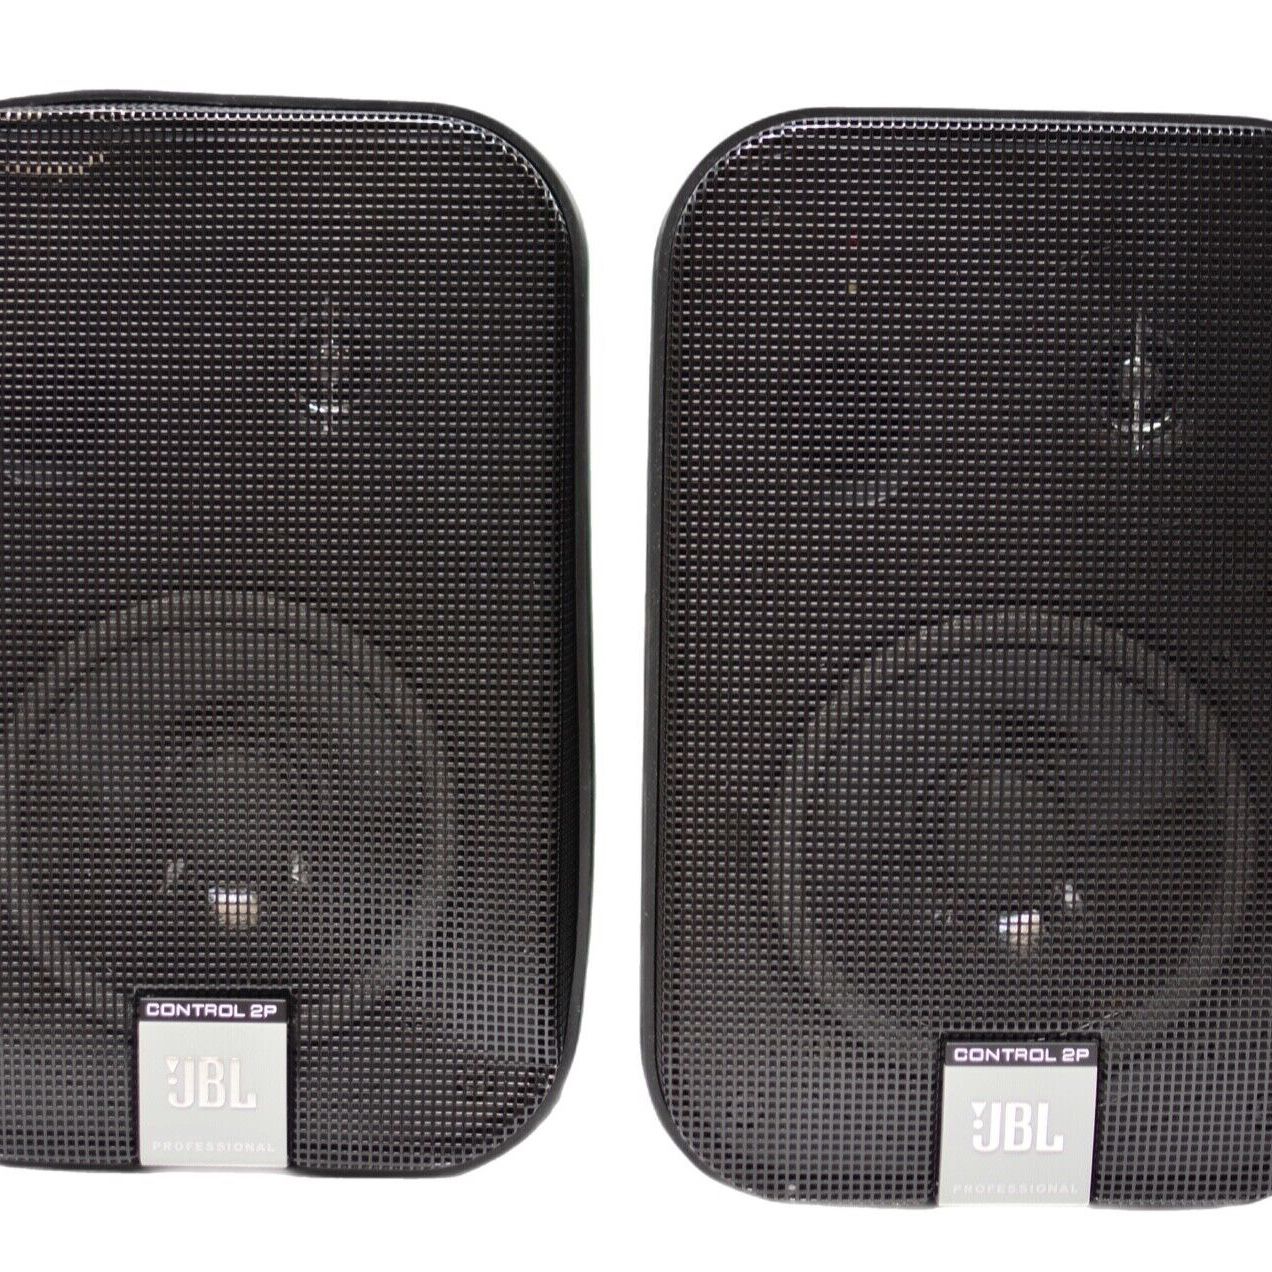 JBL Control 2P Professional Powered Monitors, Compact Black Speakers